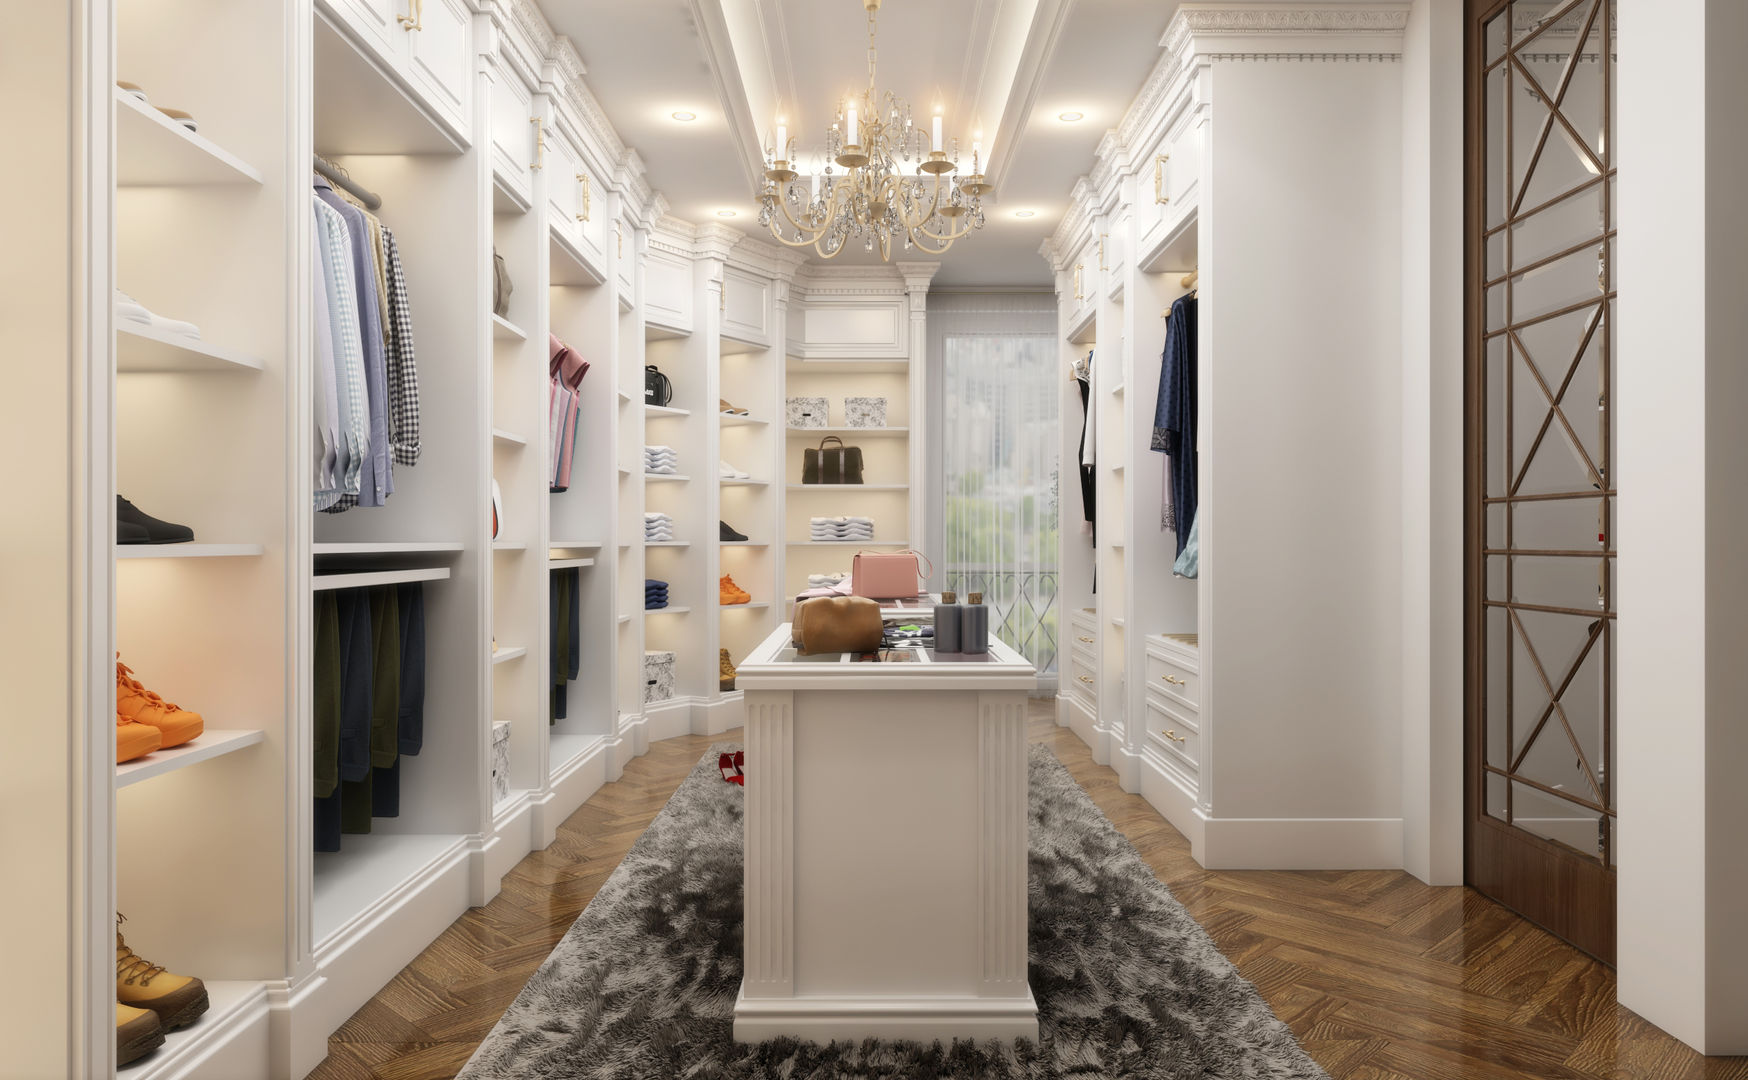 Dressing Room Sia Moore Archıtecture Interıor Desıgn Salon classique